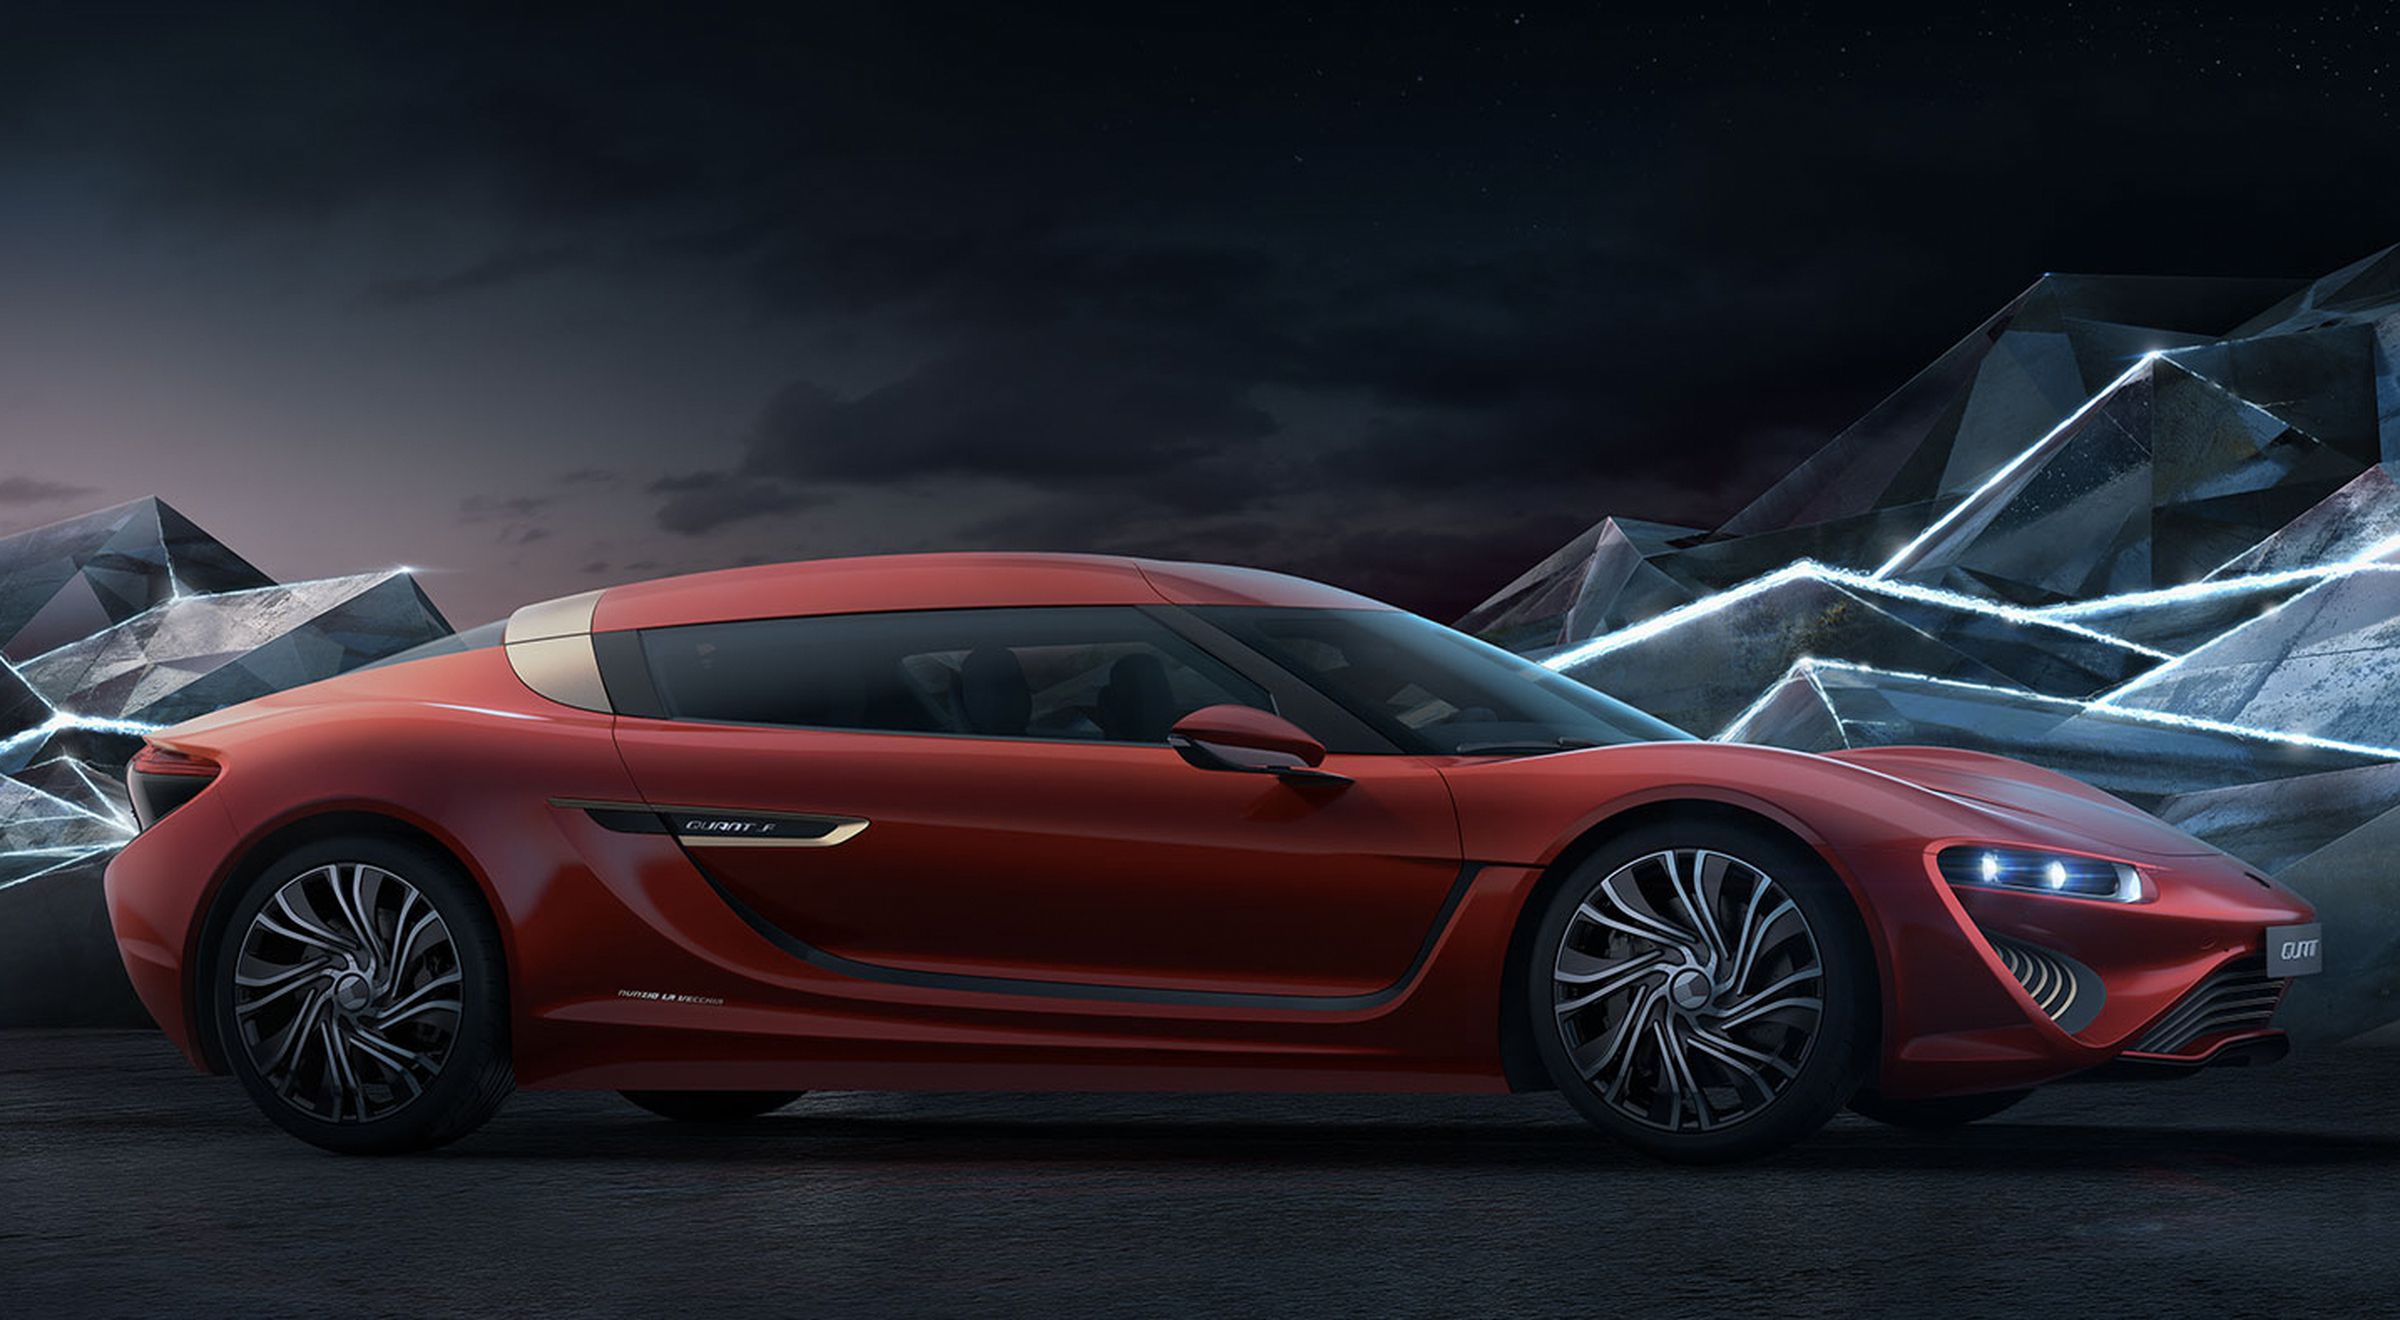 Teasers of the Geneva Motor Show 2015